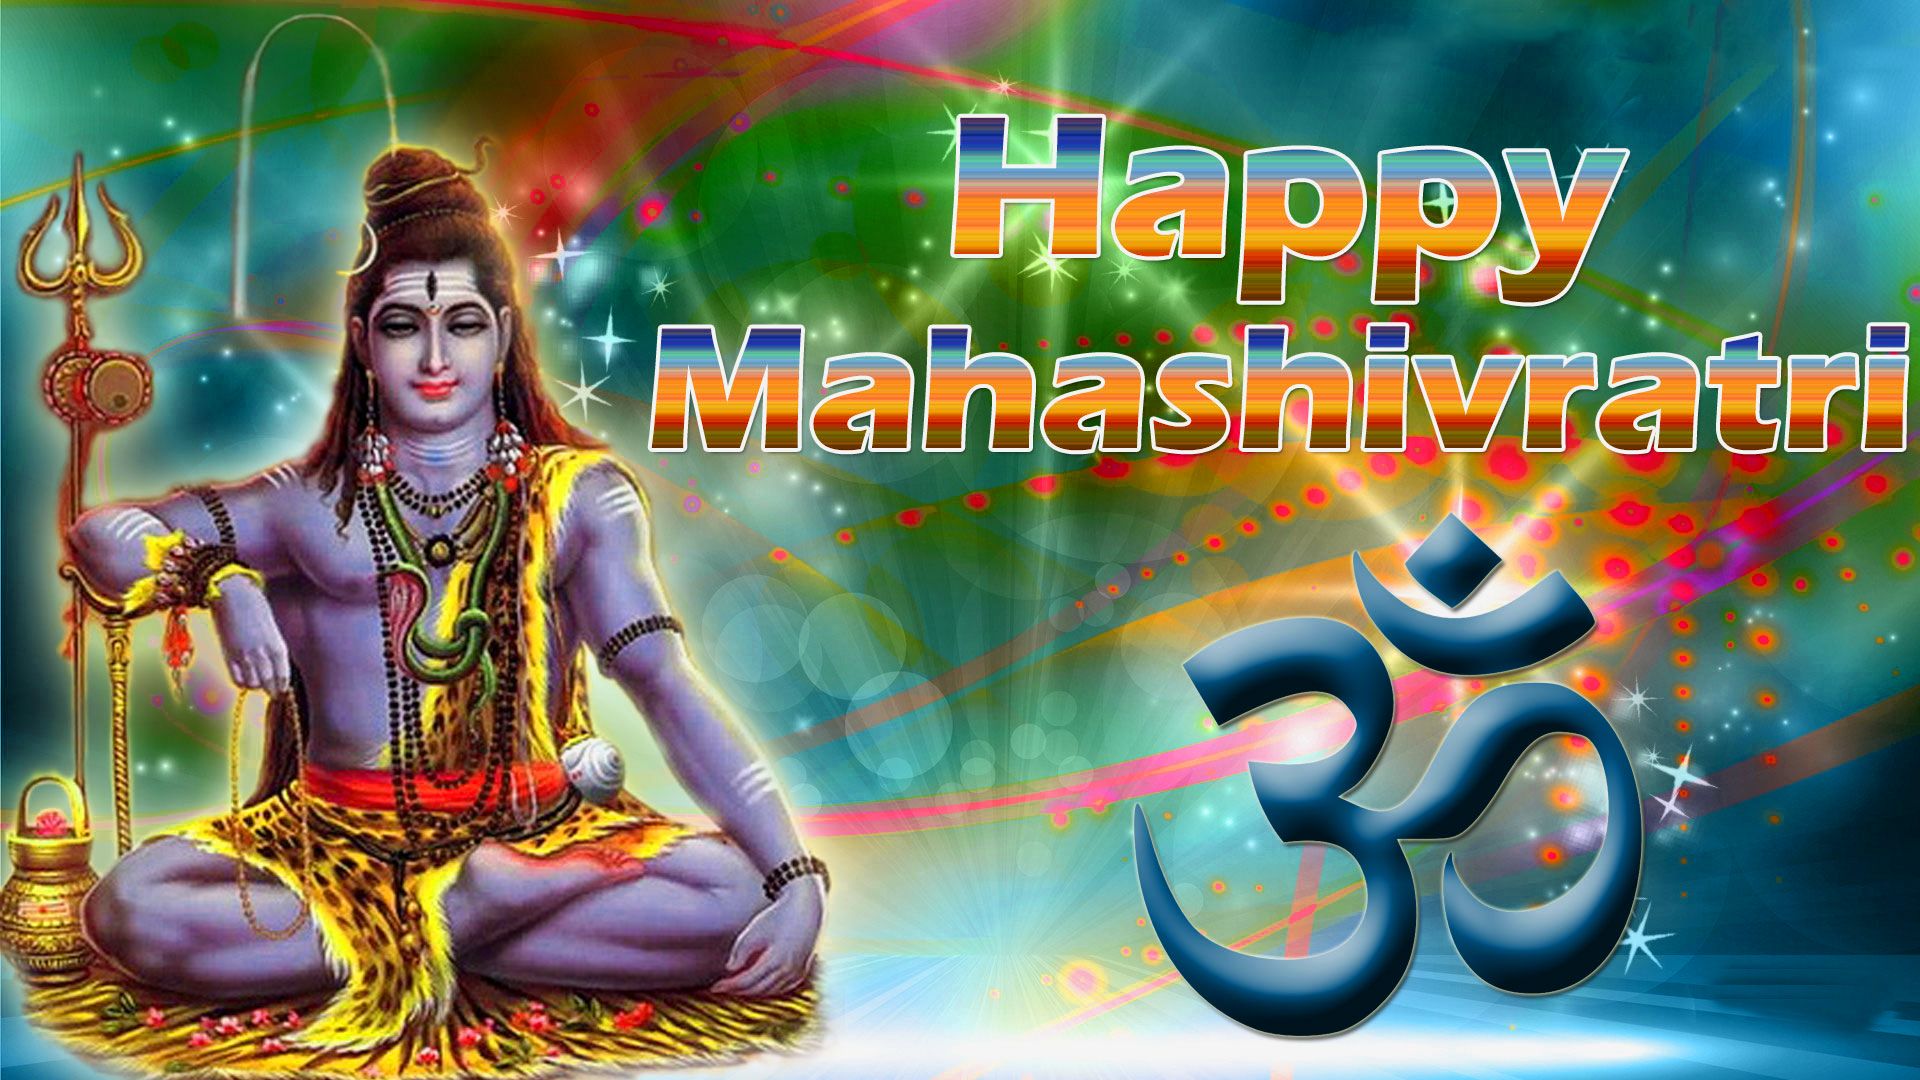 Happy Mahashivratri Hd Images Download - Best Images Of Mahashivratri -  1920x1080 Wallpaper 